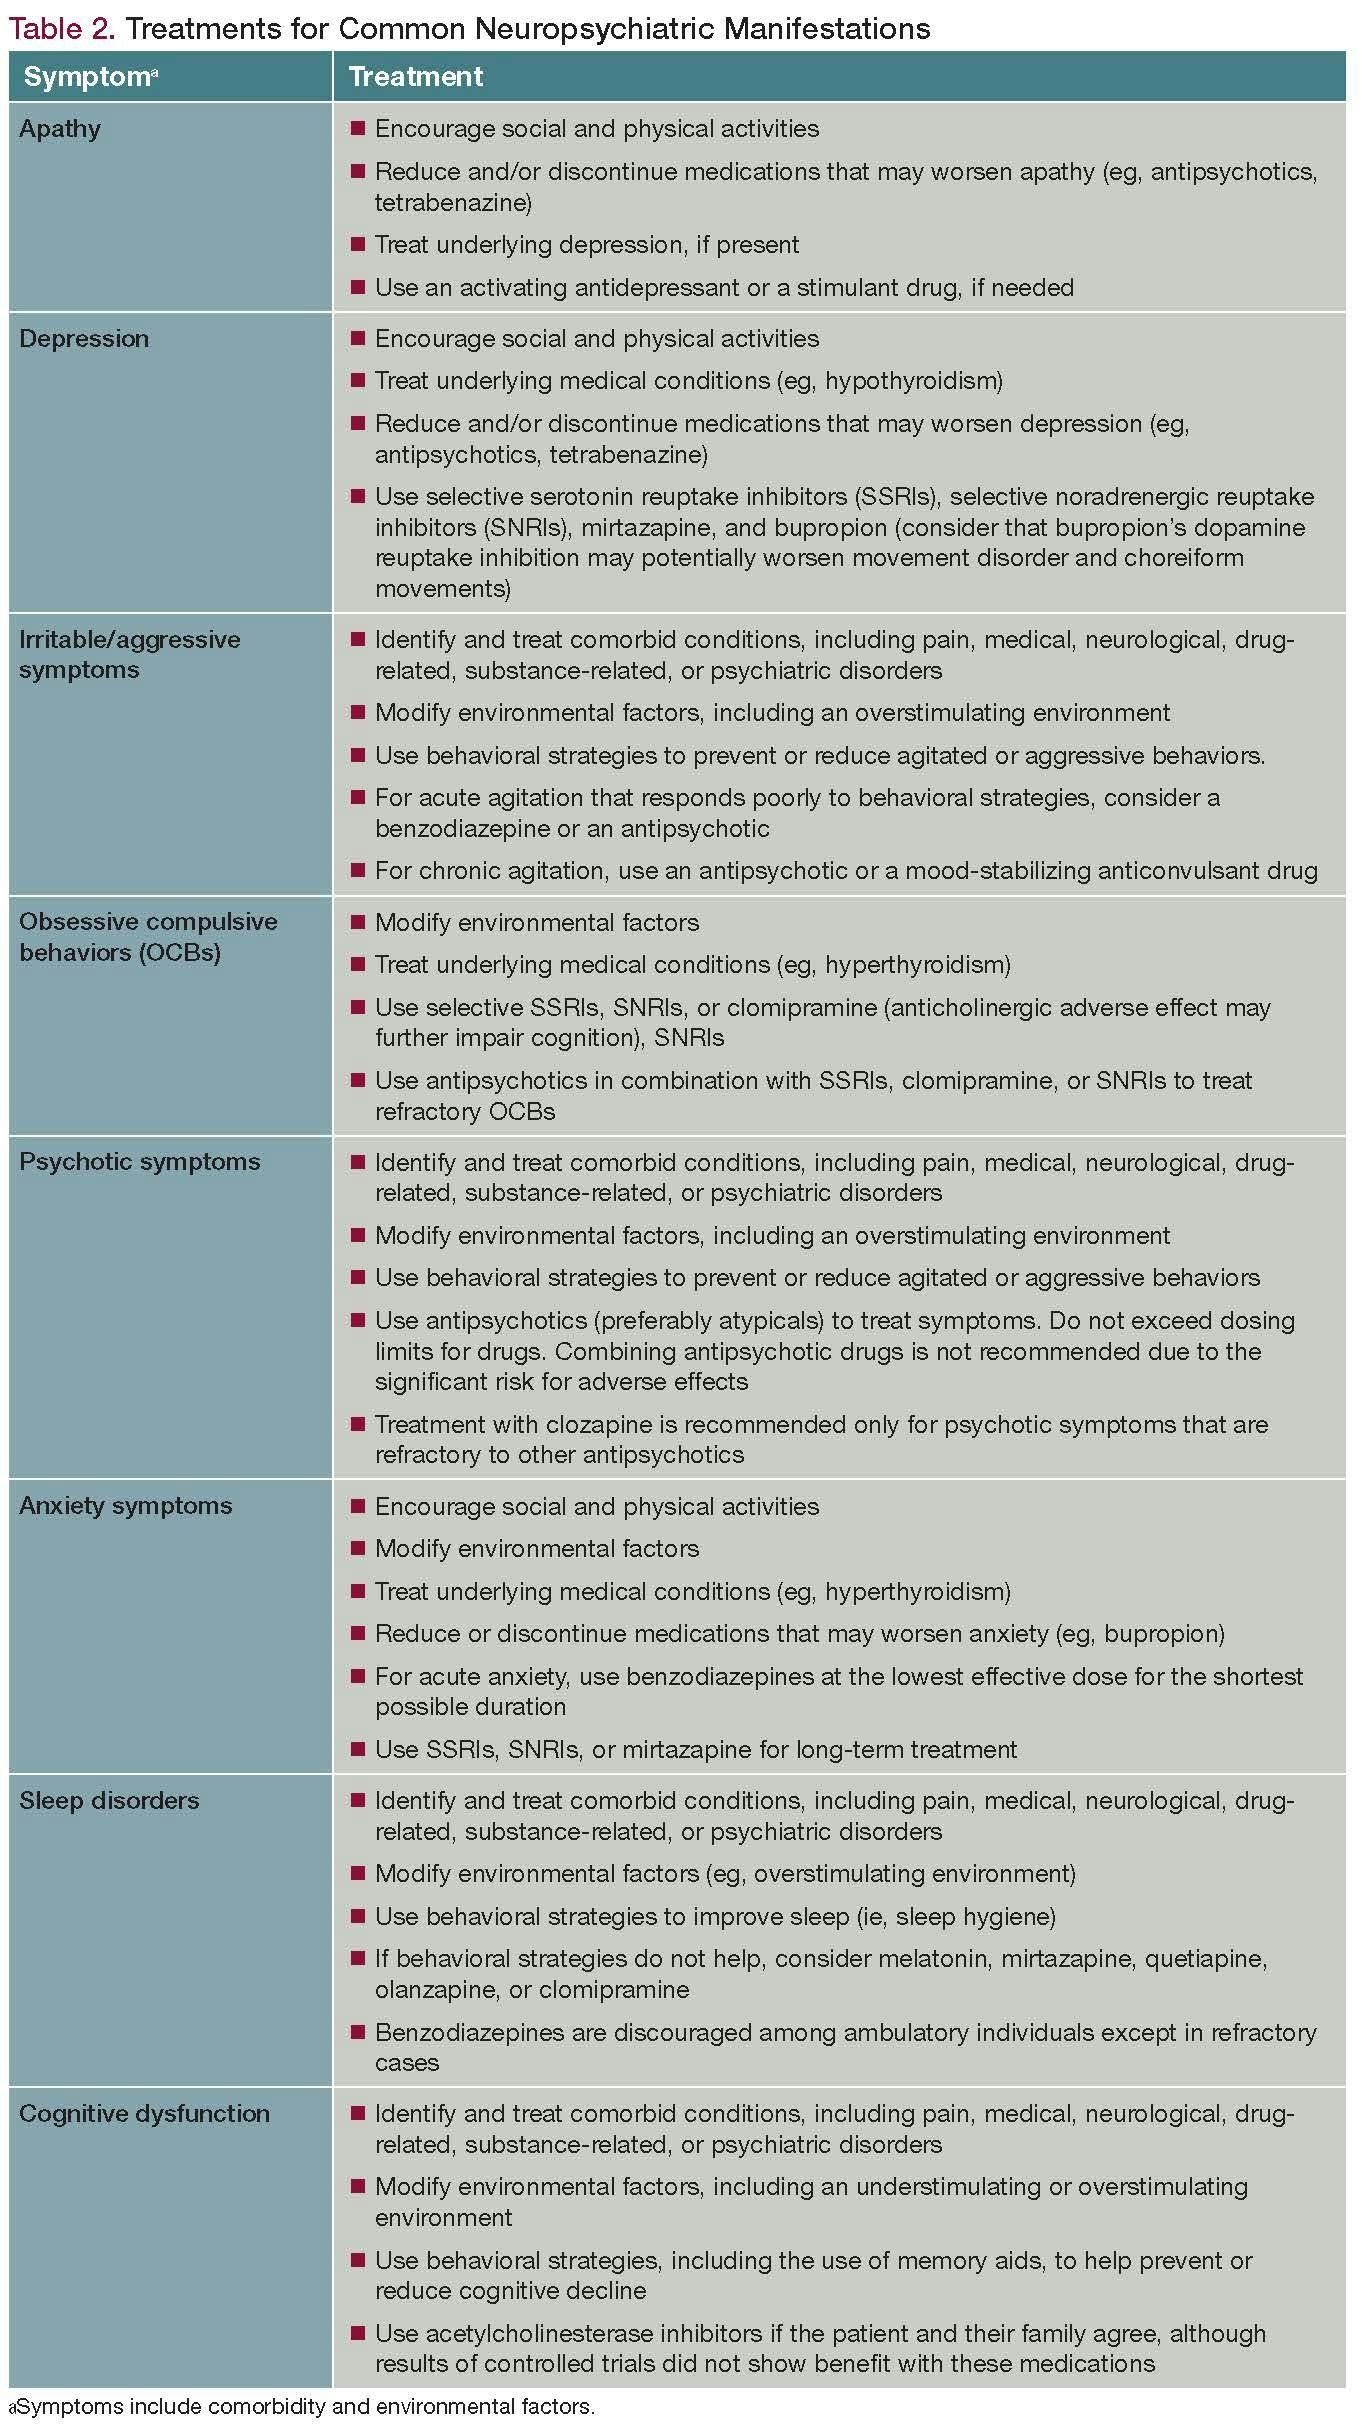 Table 2. Treatments for Common Neuropsychiatric Manifestations